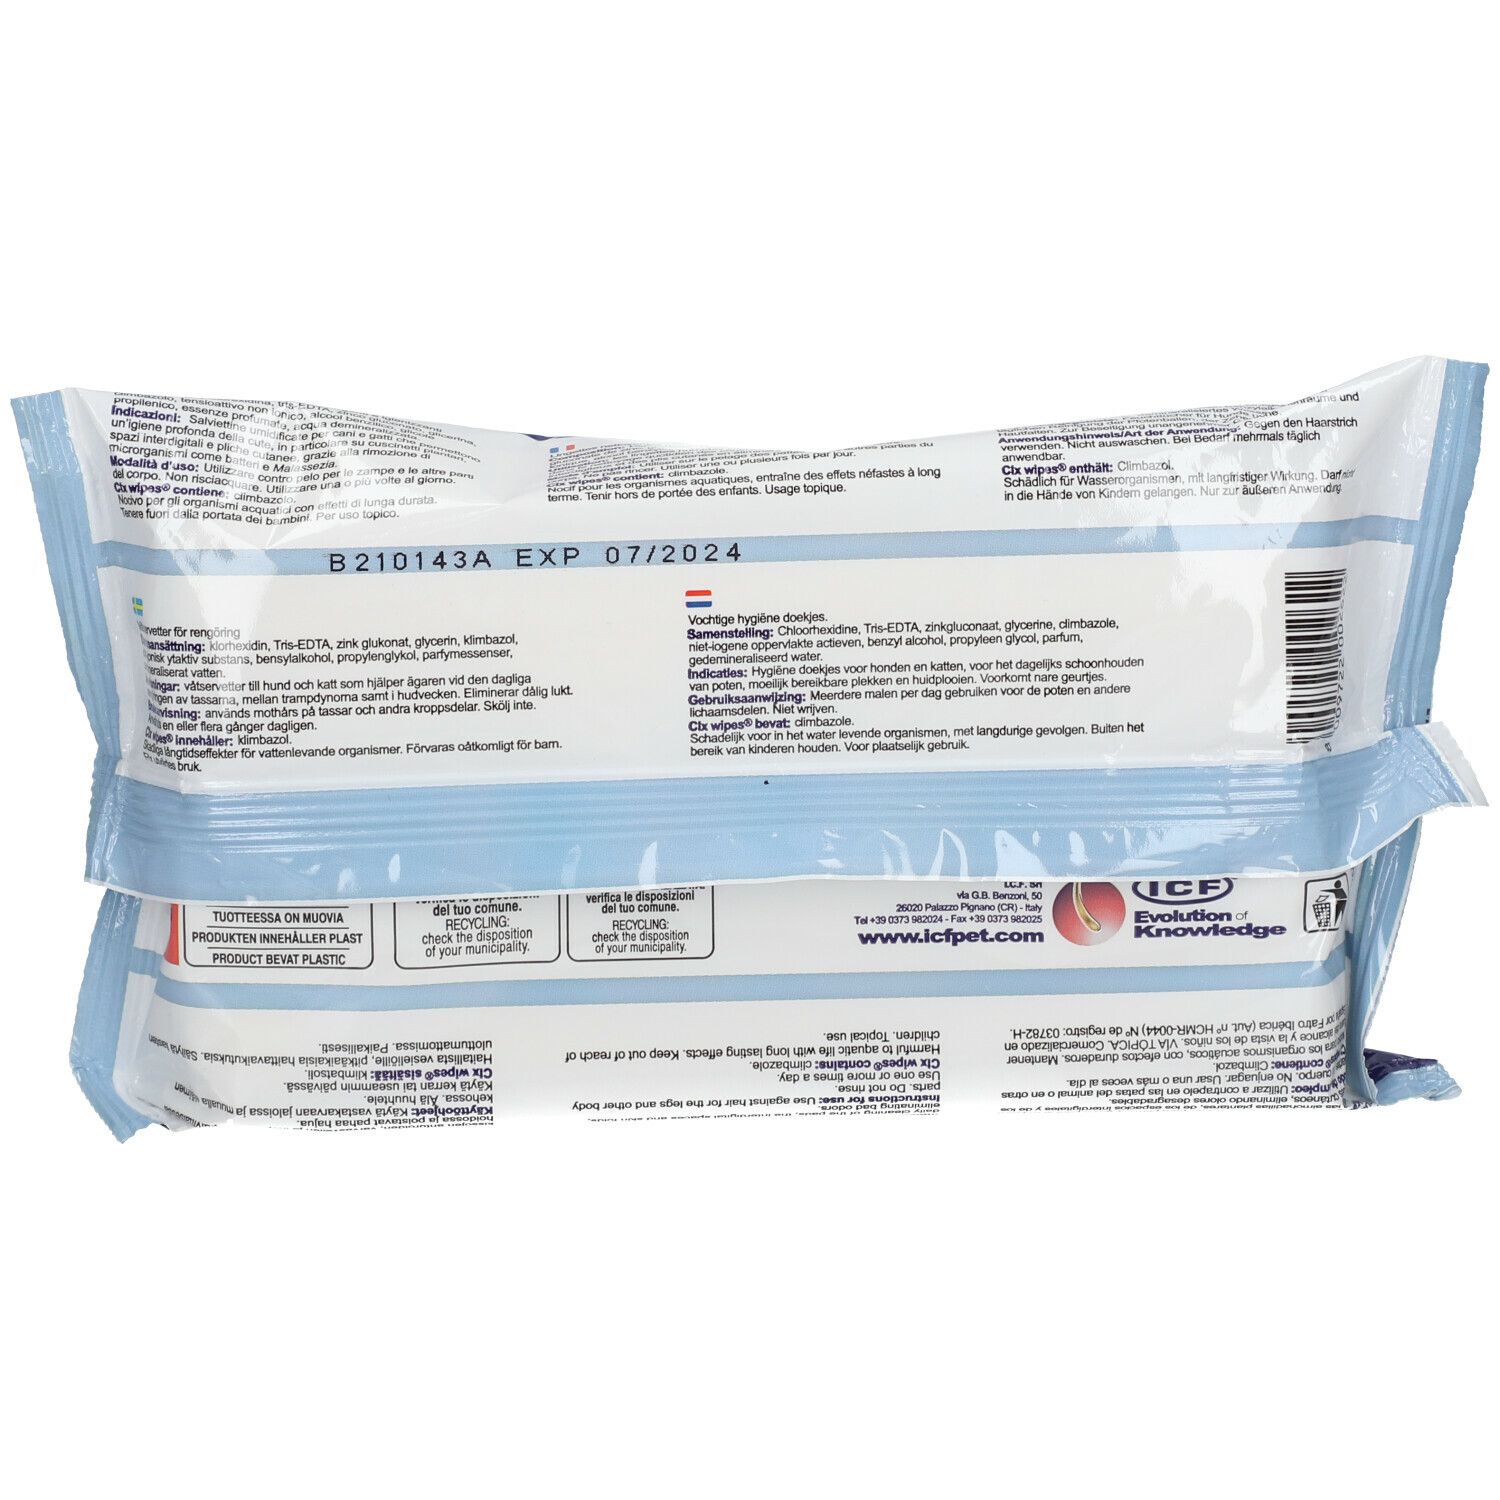 CLX® Wipes Salviettine Detergenti Umidificate